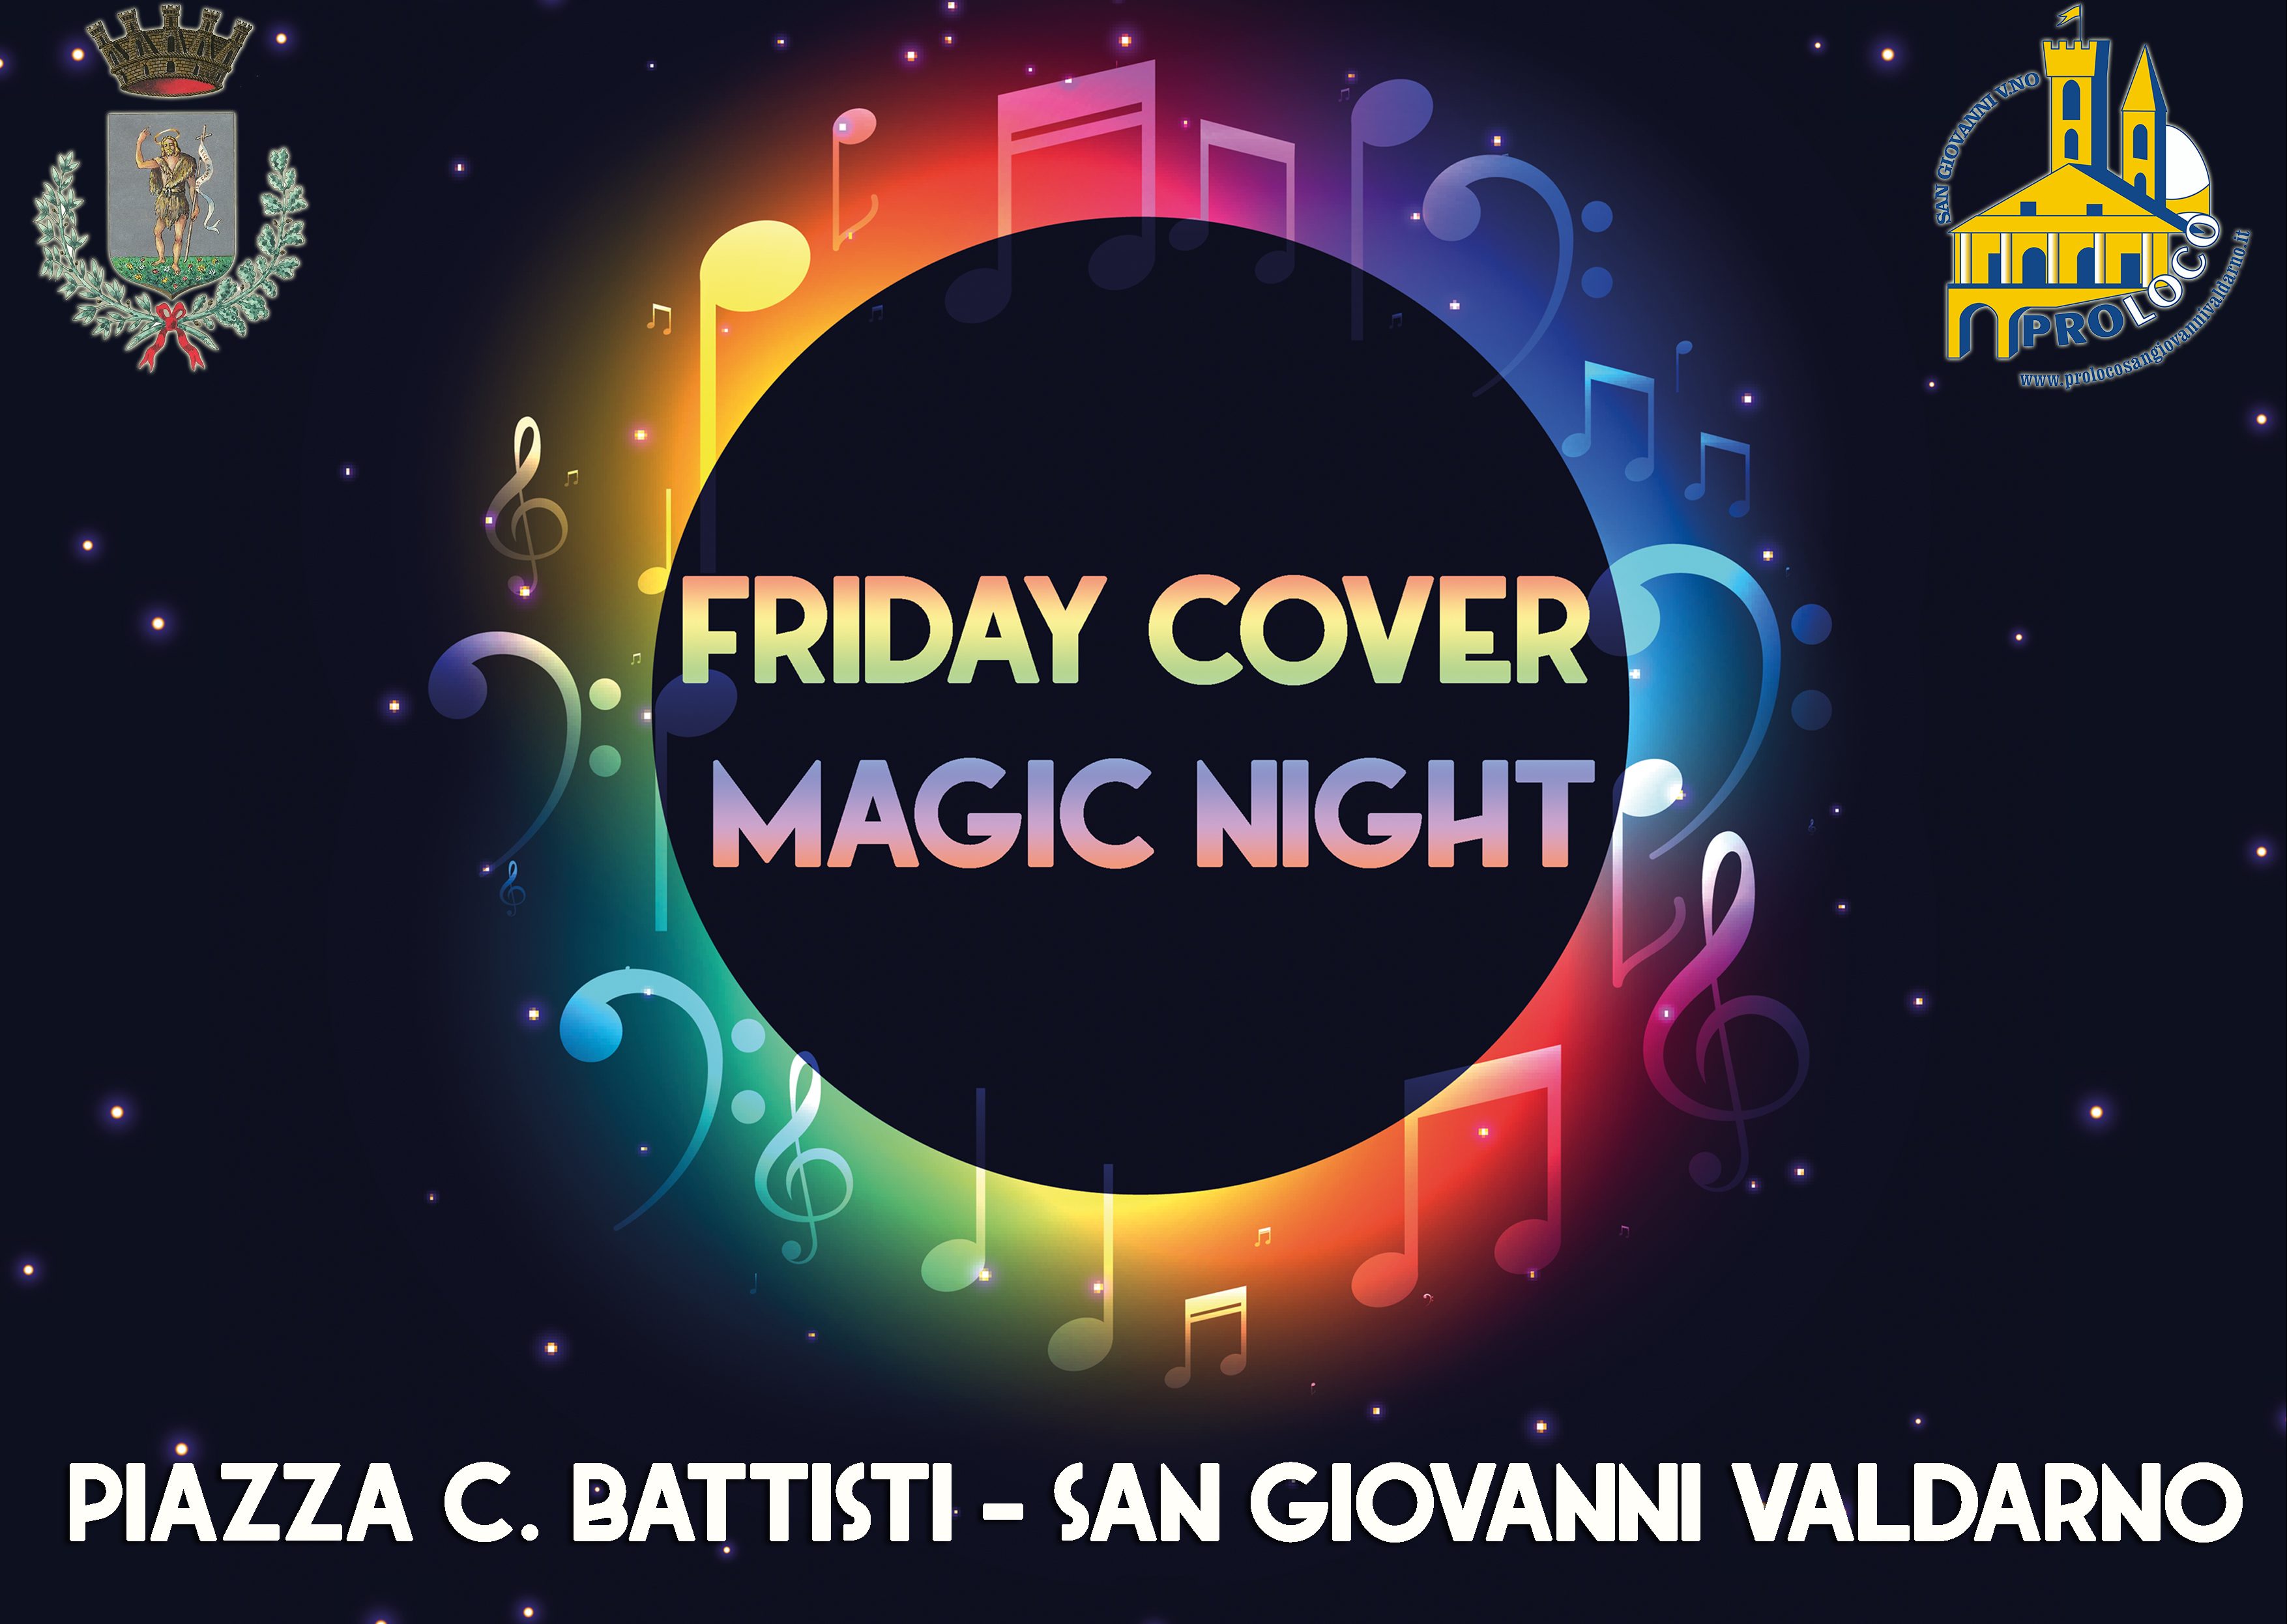 Friday cover magic night